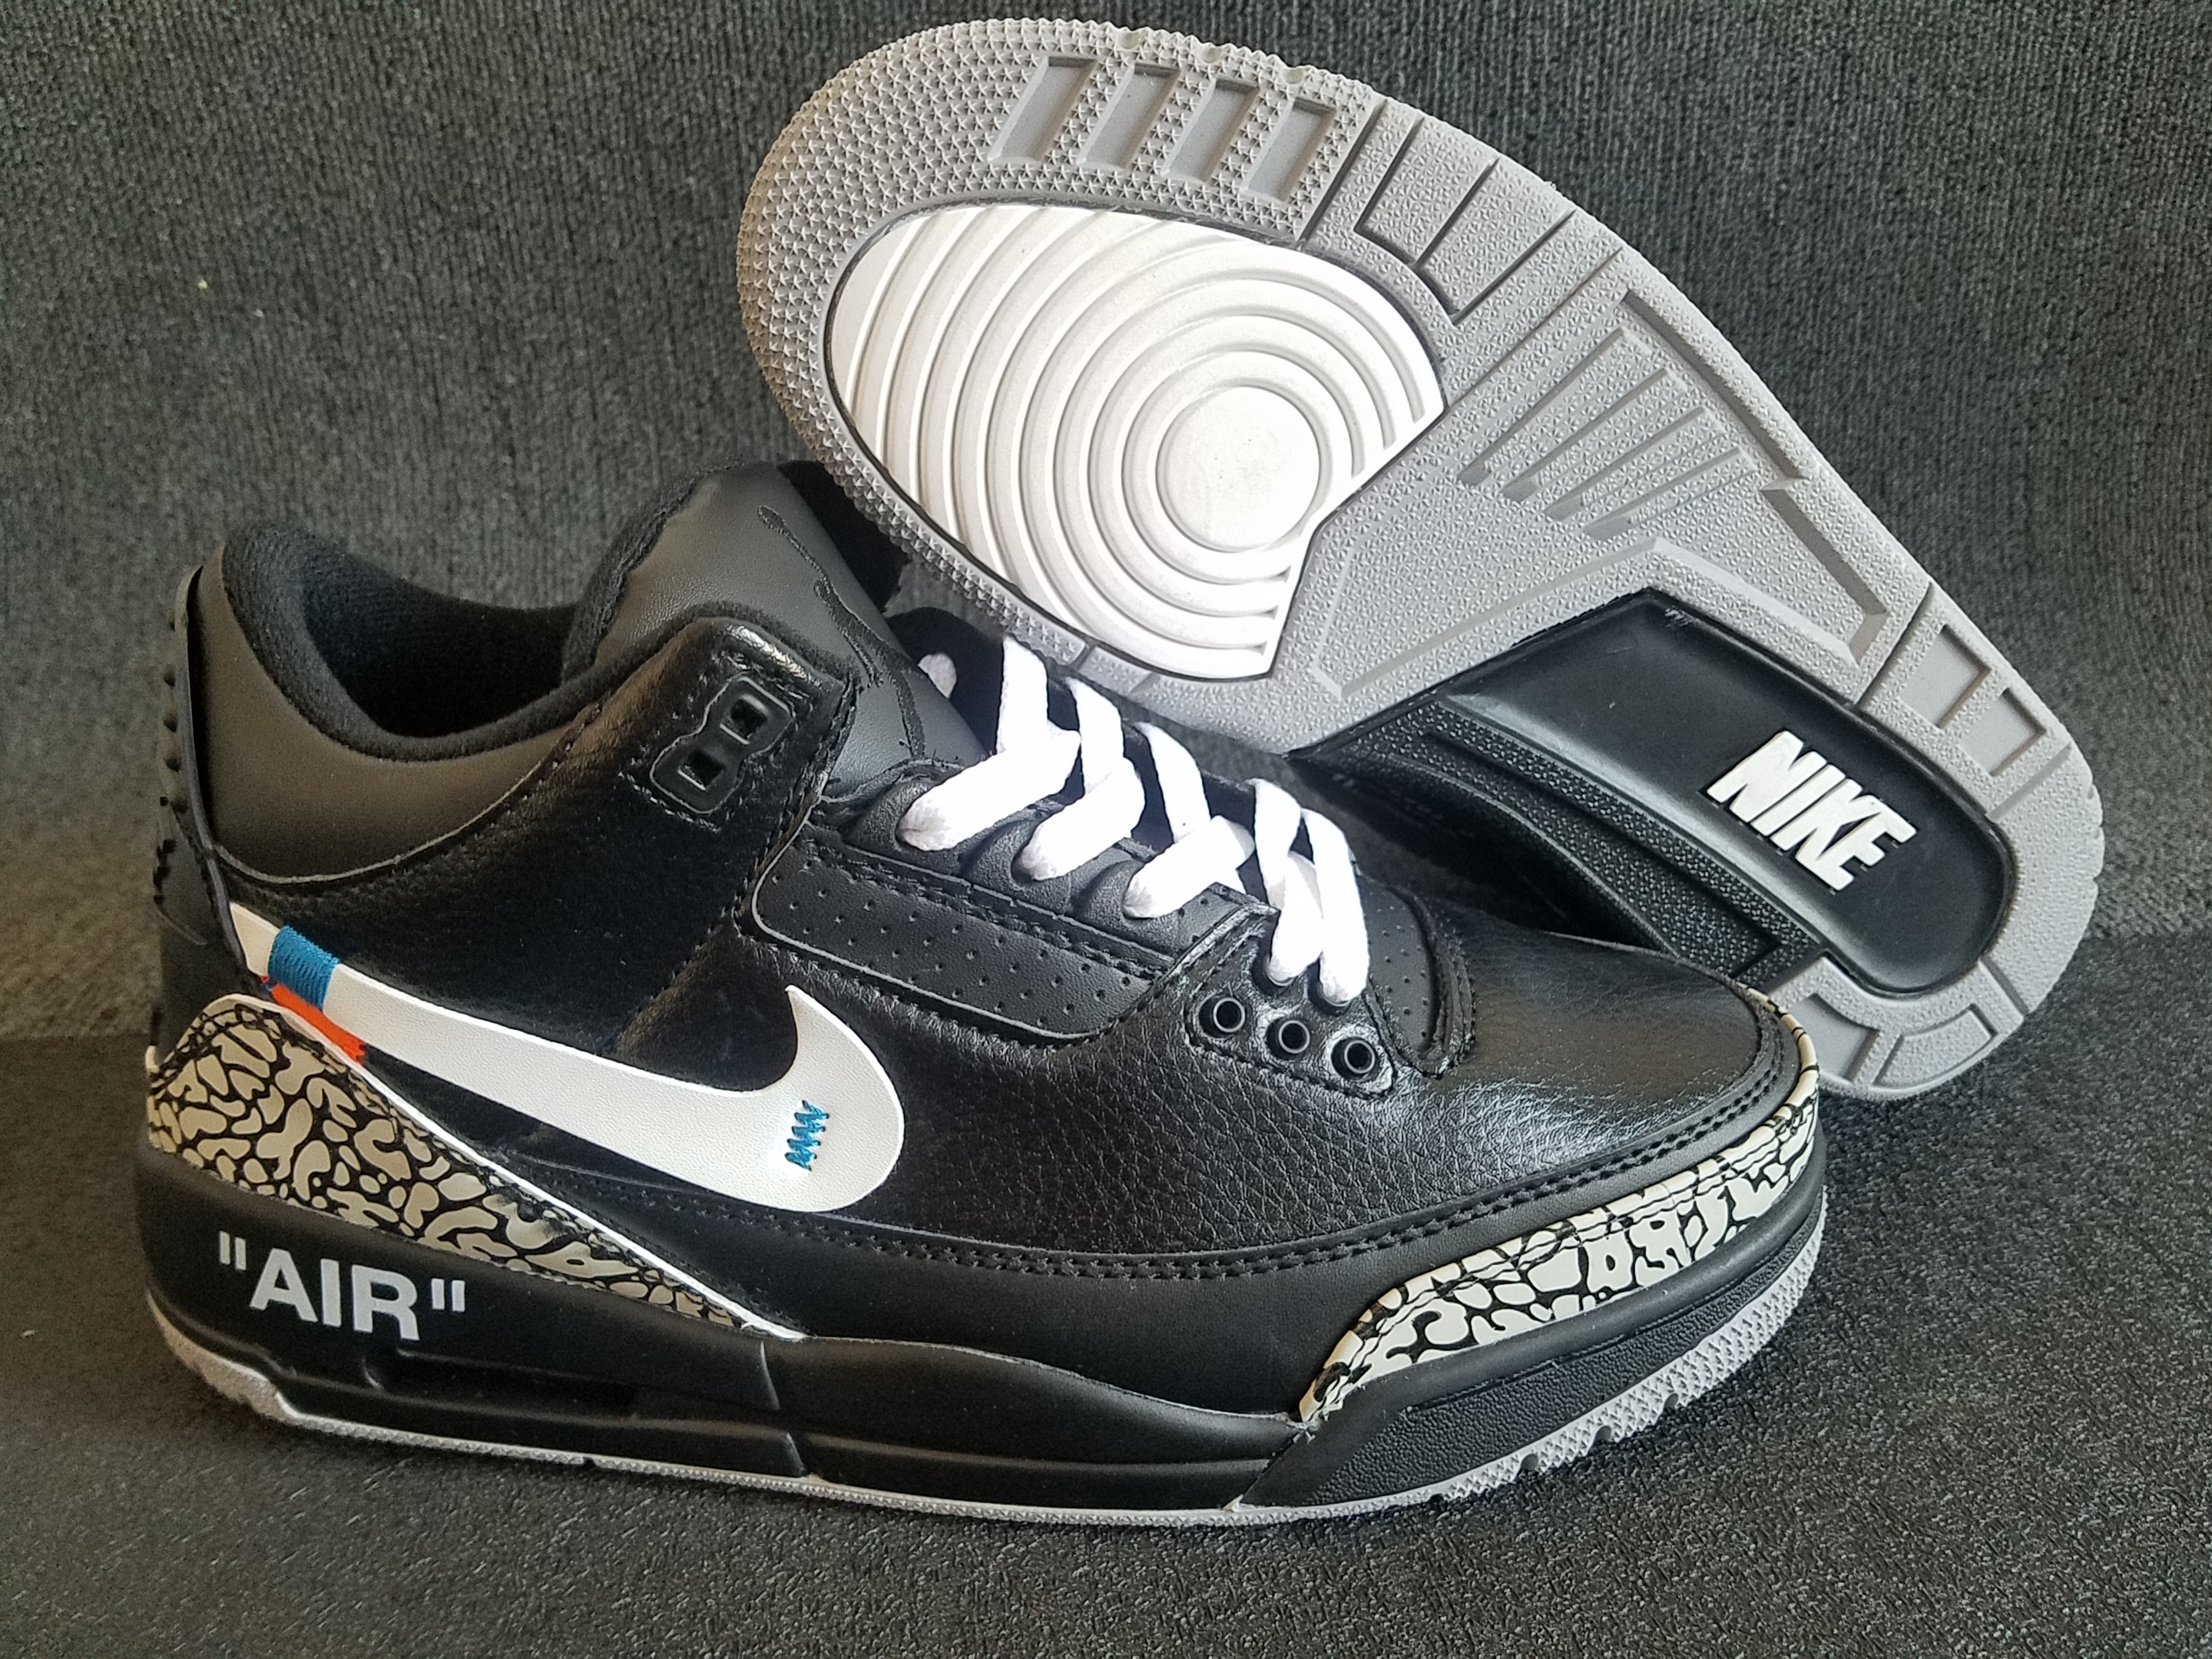 AJ3 x off black cement grey white shoes